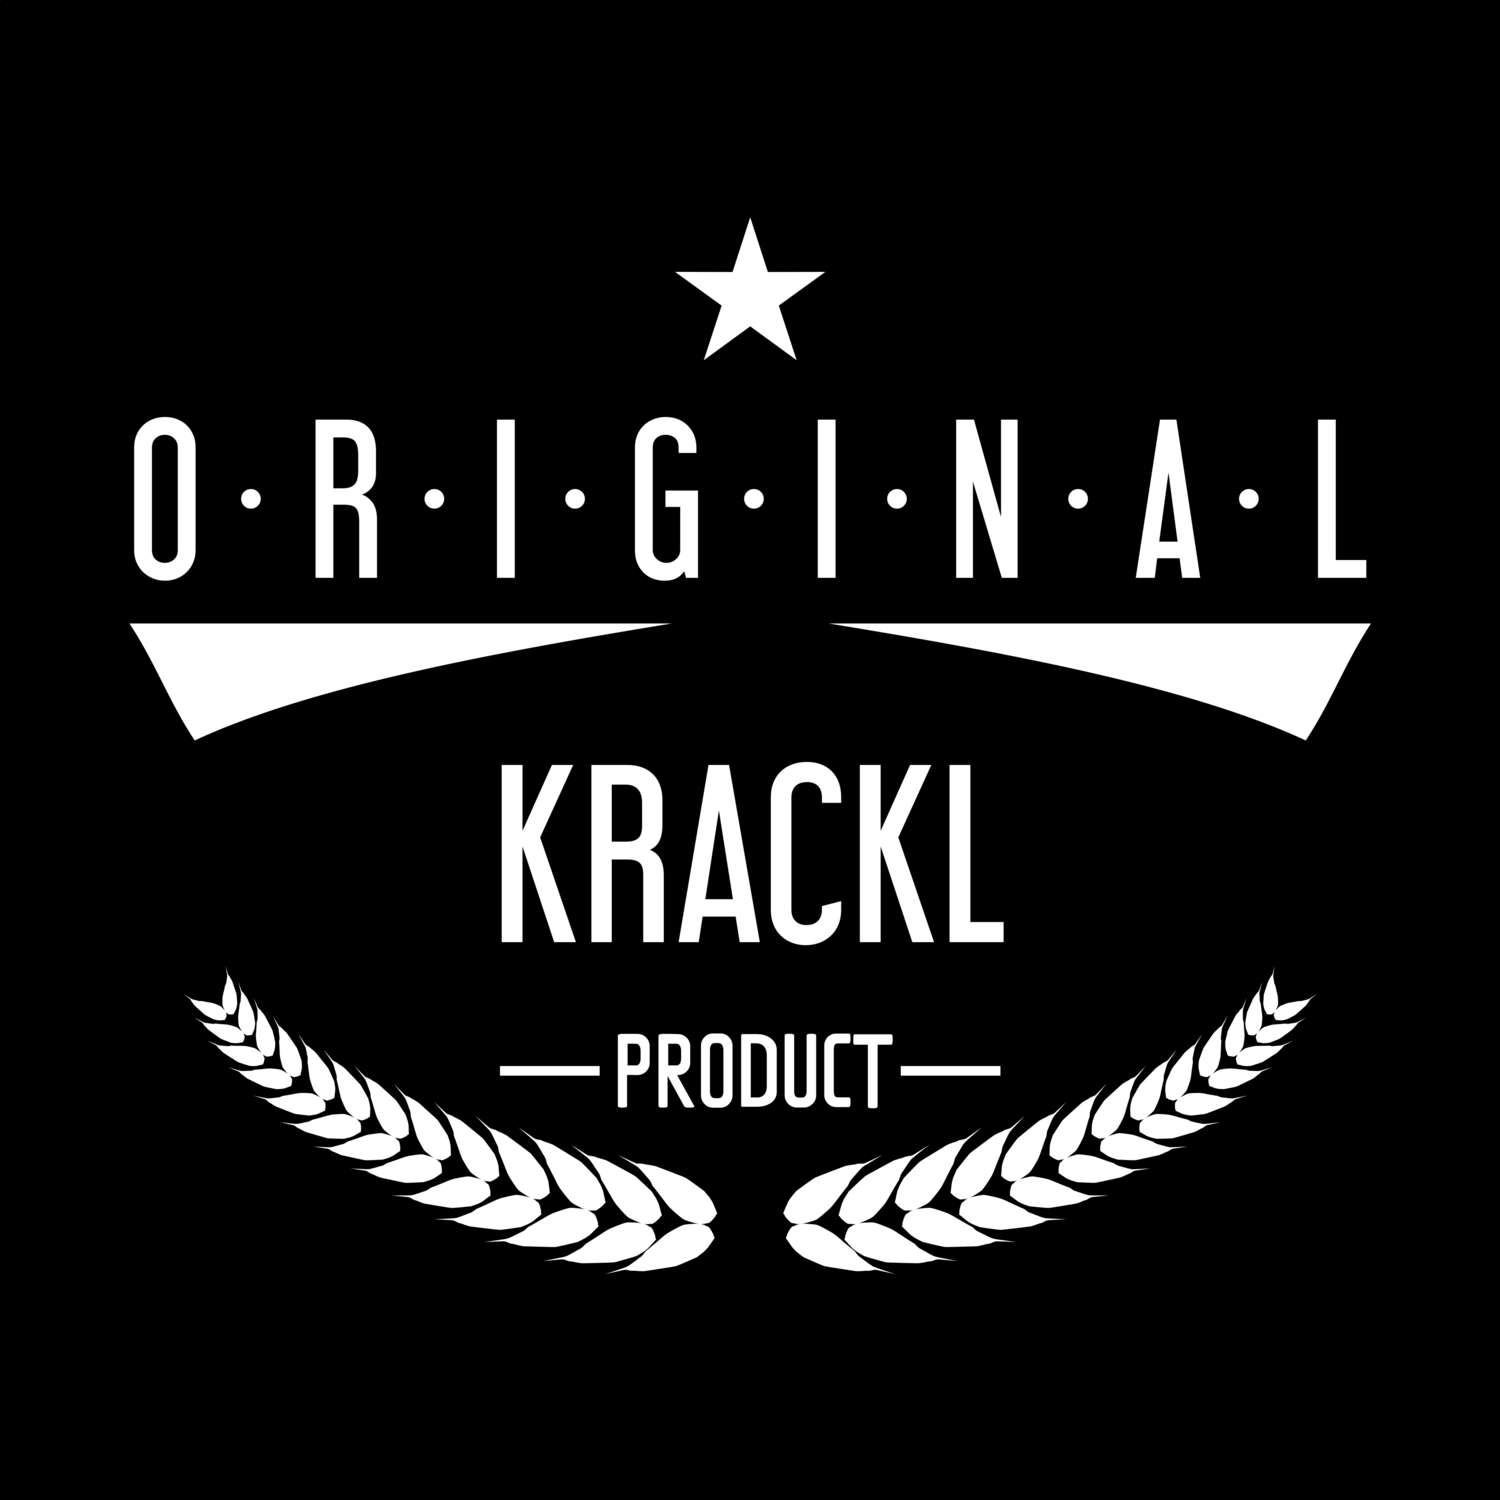 Krackl T-Shirt »Original Product«